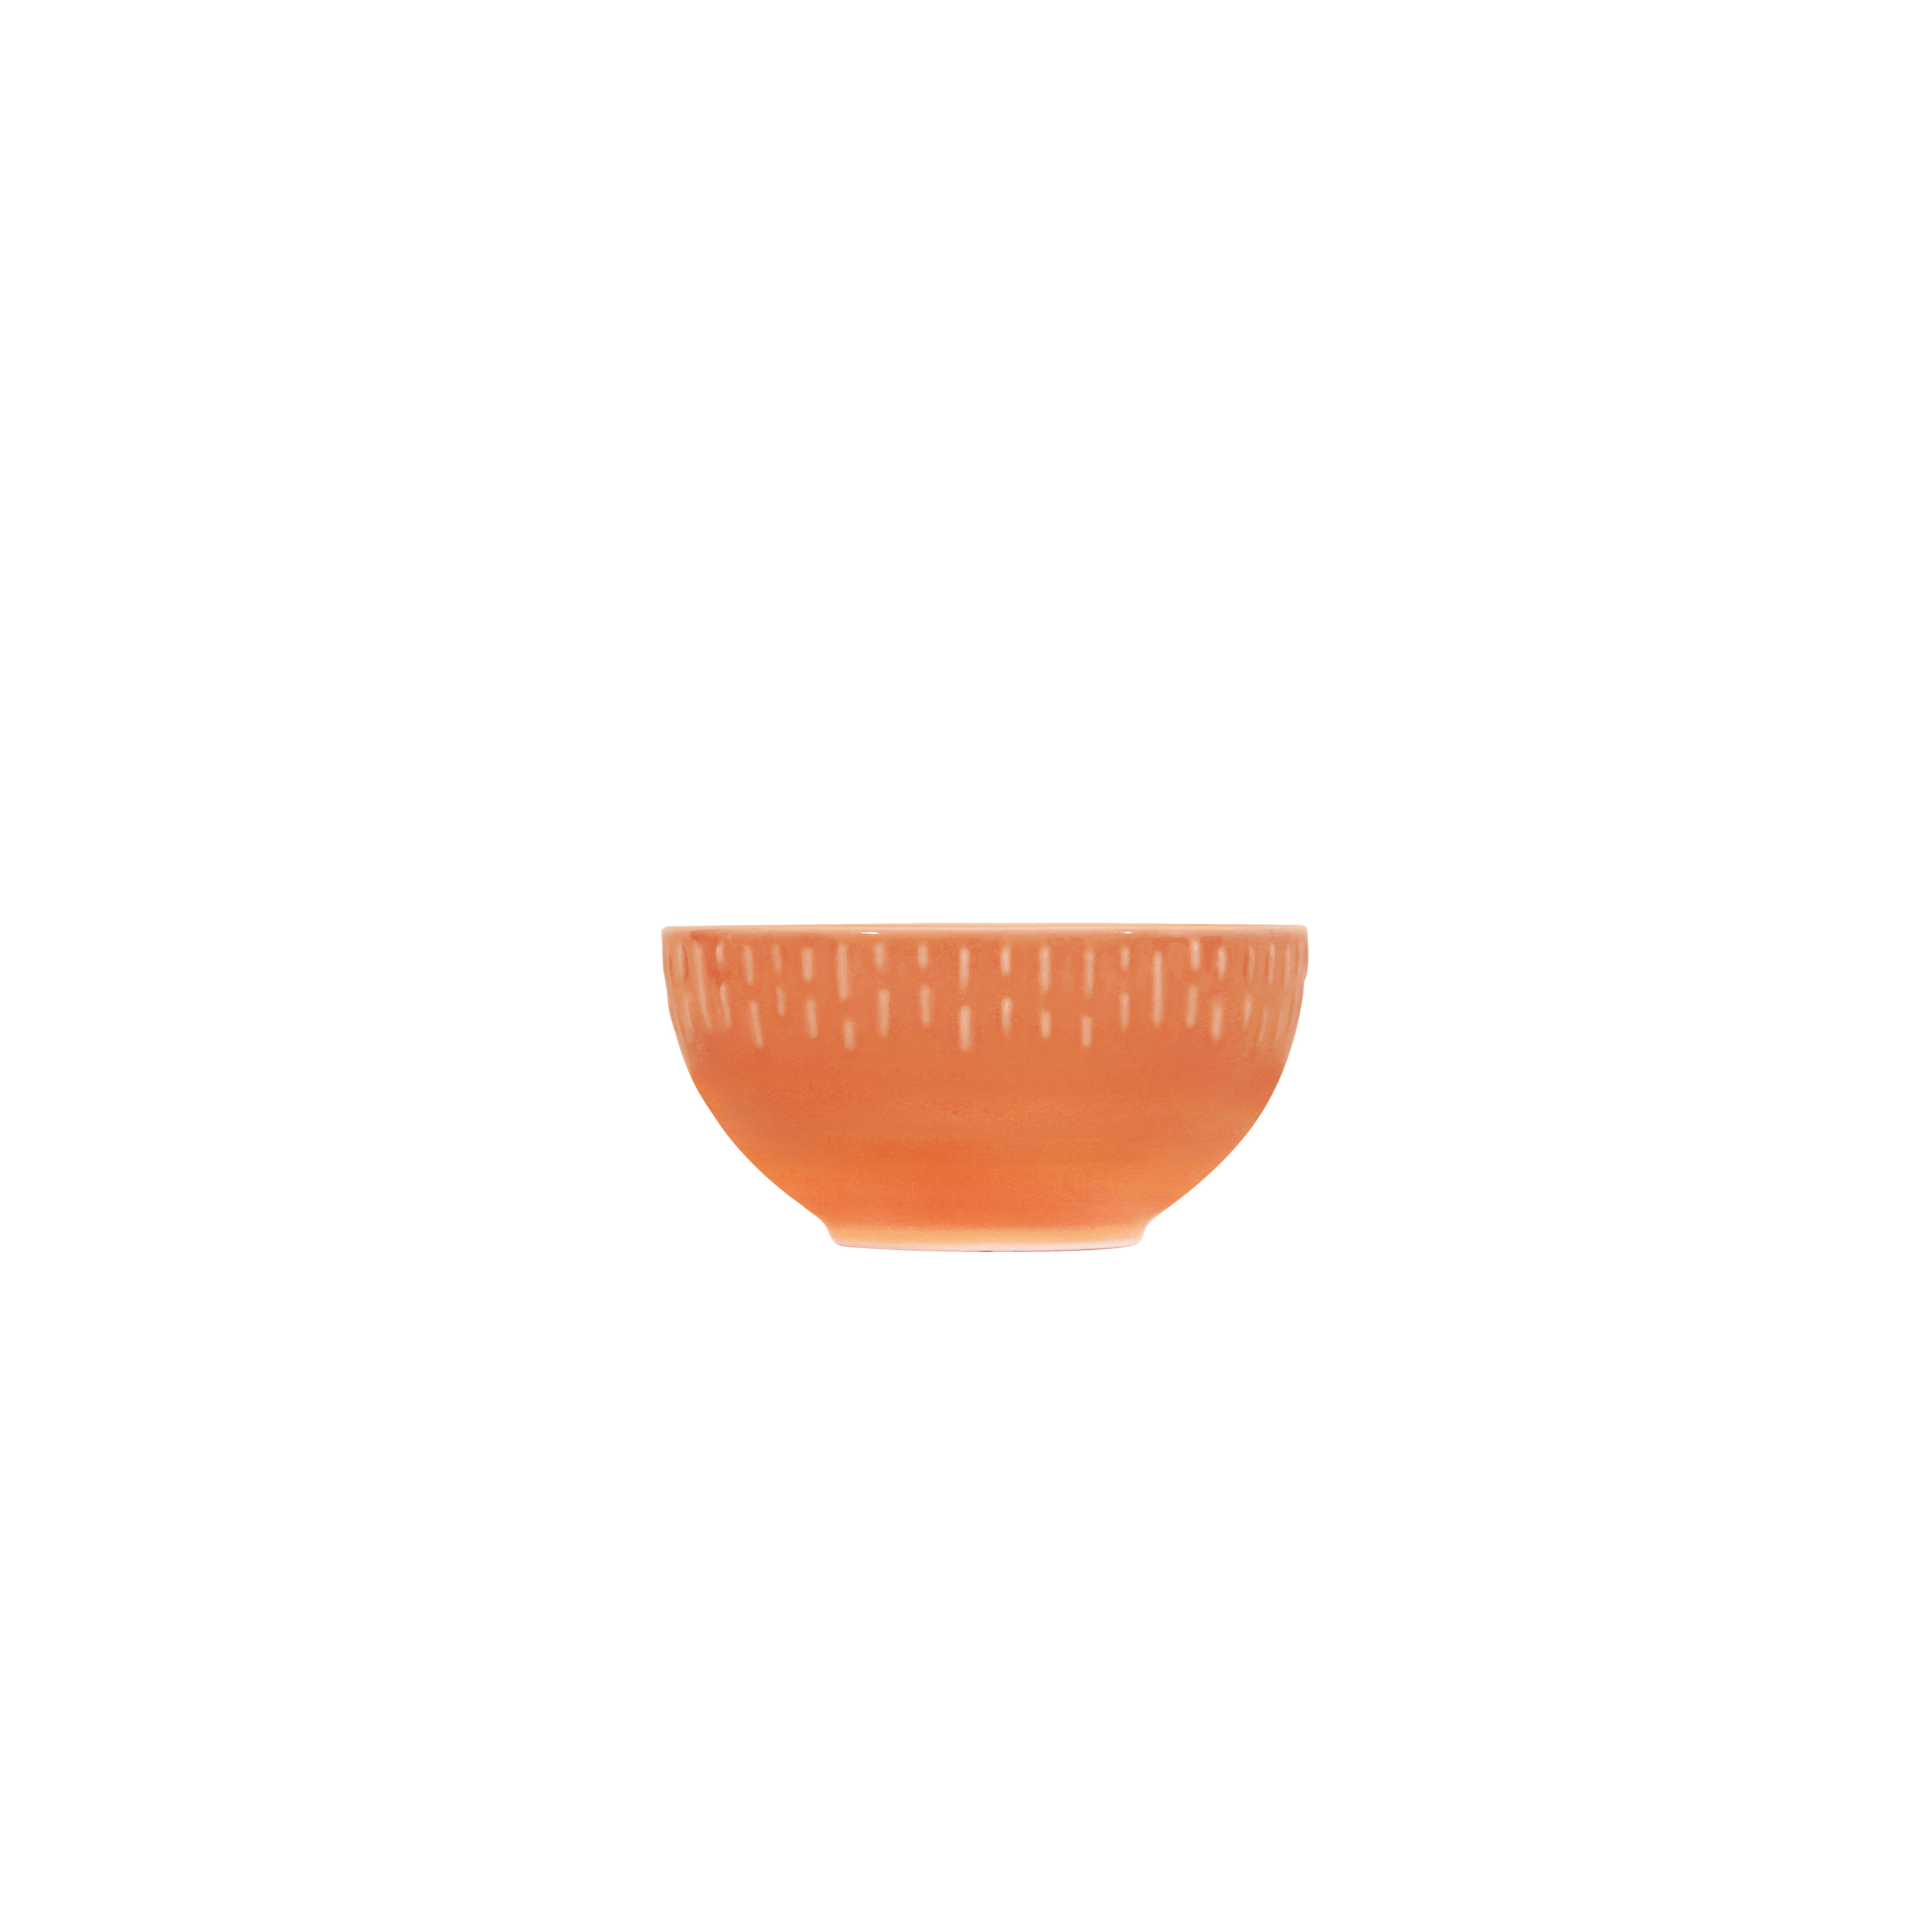 Aida - Life in Colour - Confetti - Apricot bowl w/relief porcelain (13327) - Hjemme og kjøkken